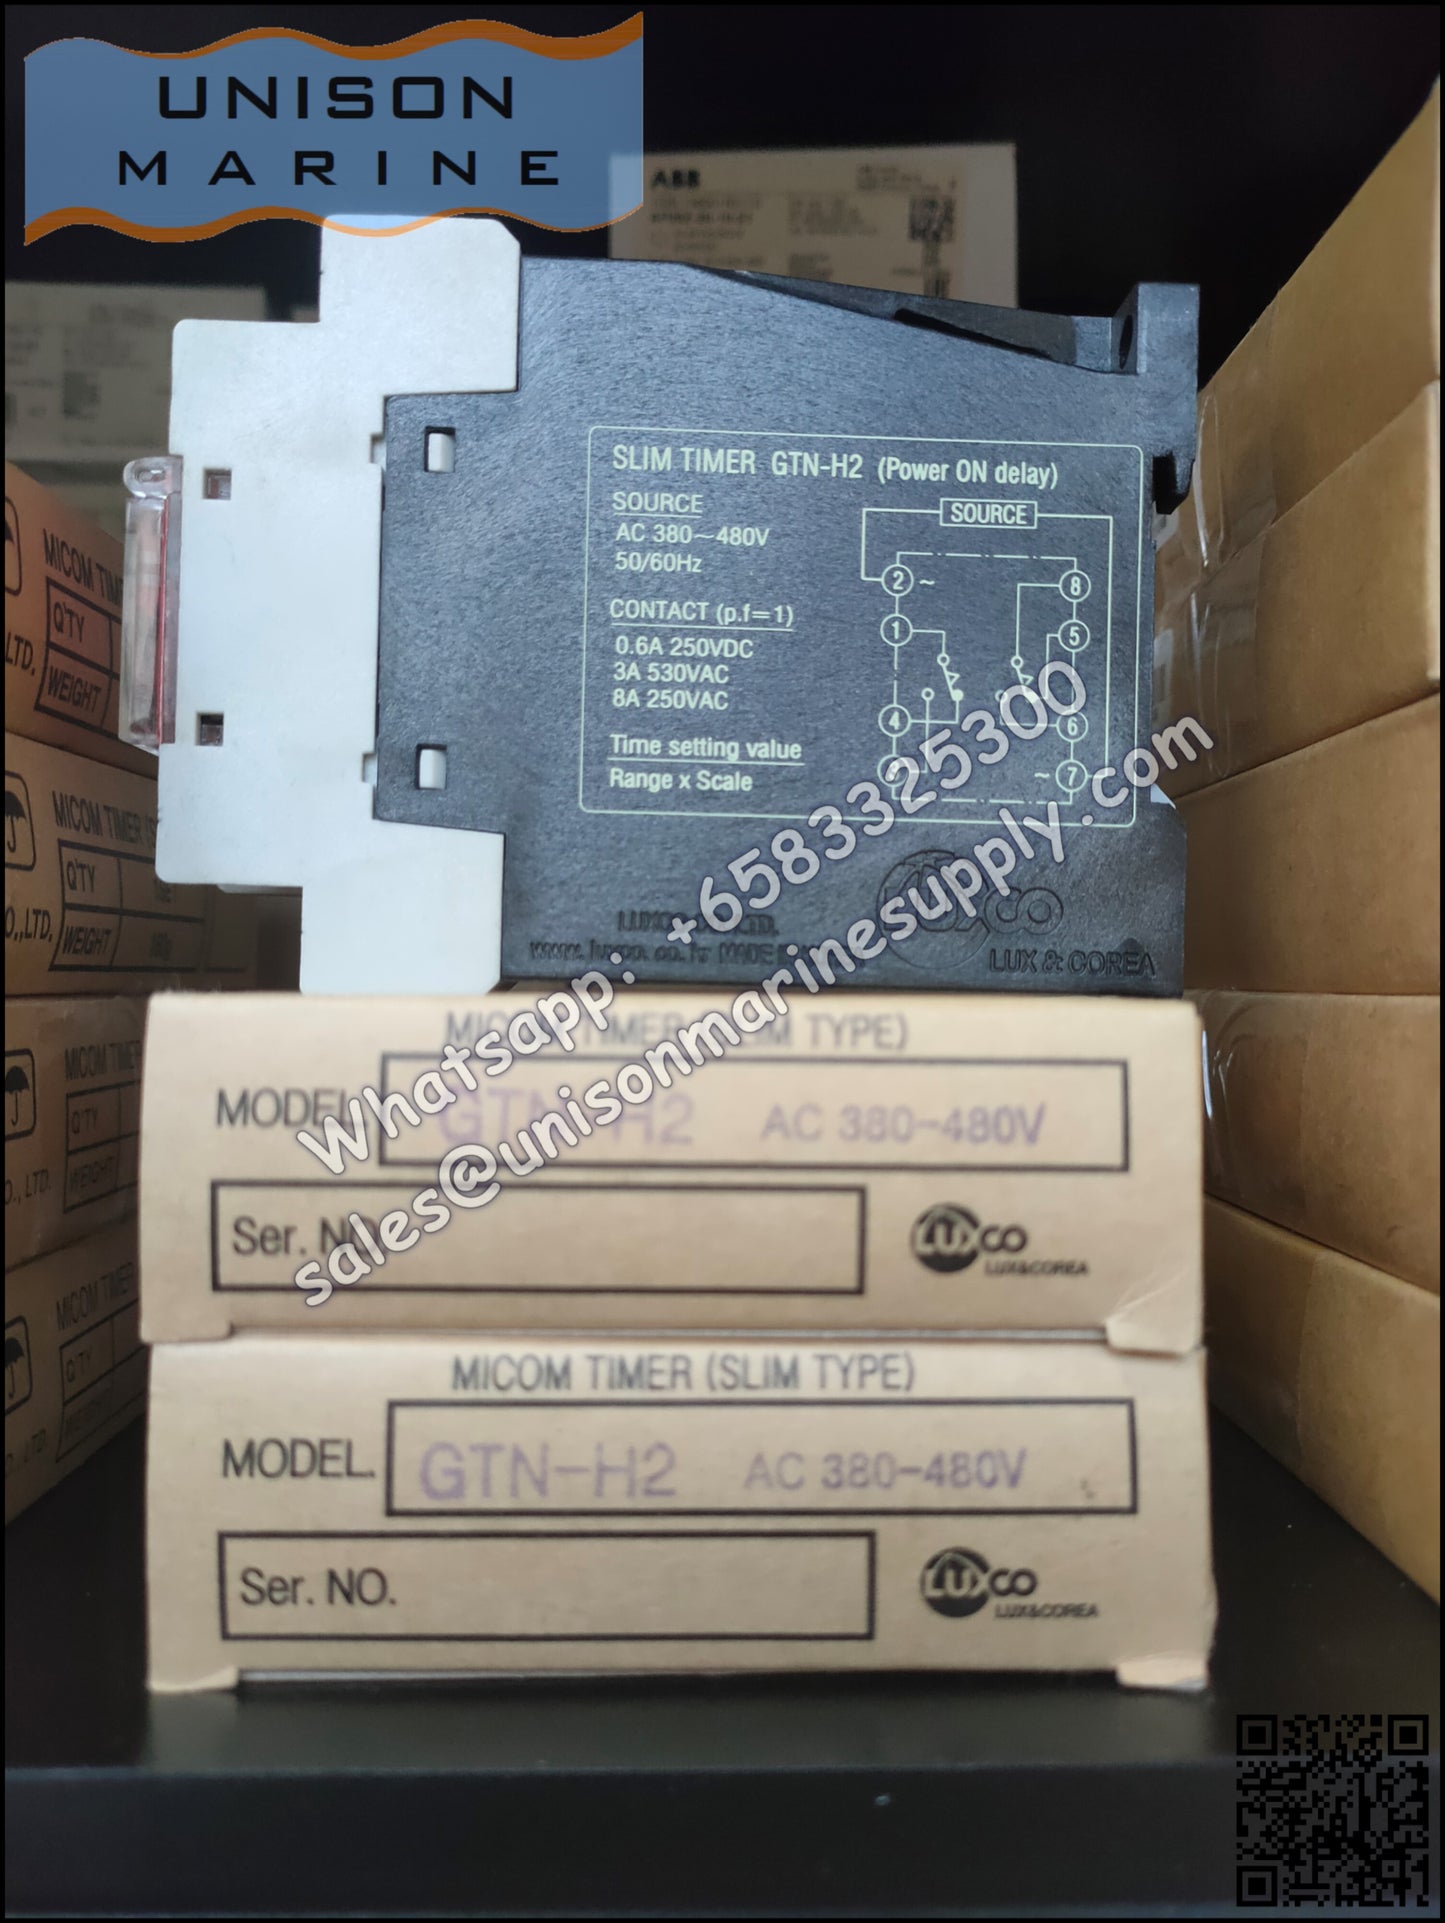 Westronics（LUXCO）Marine Slim Timer : GTN-H2 AC380-480V